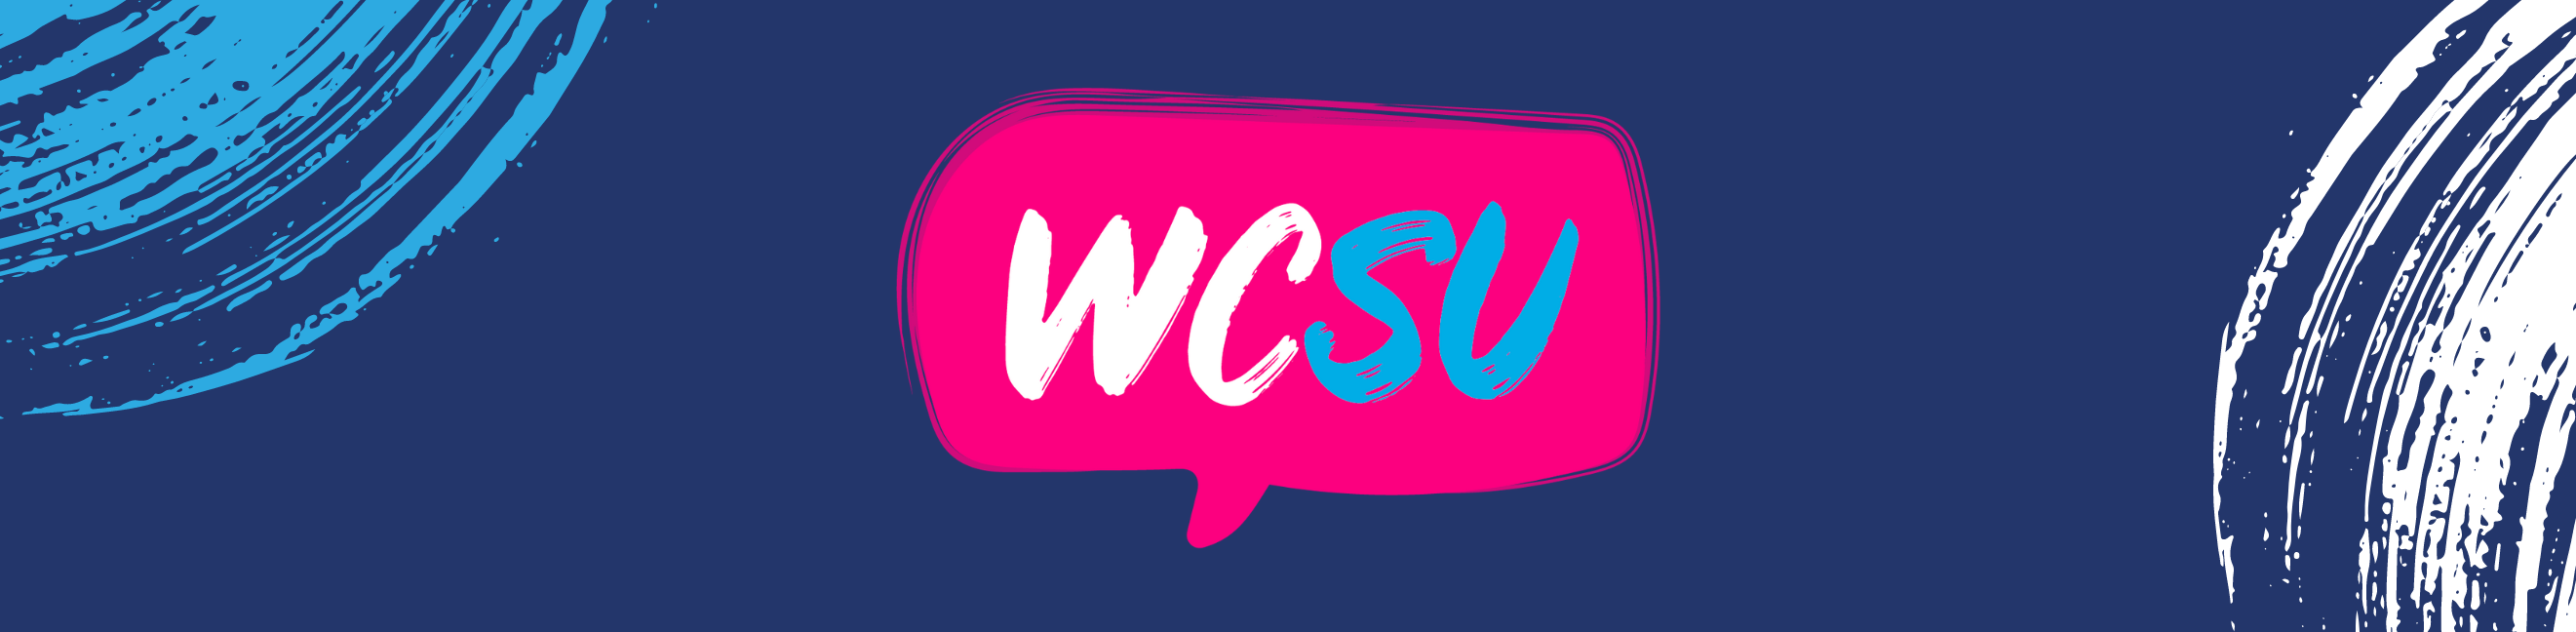 student union logo header